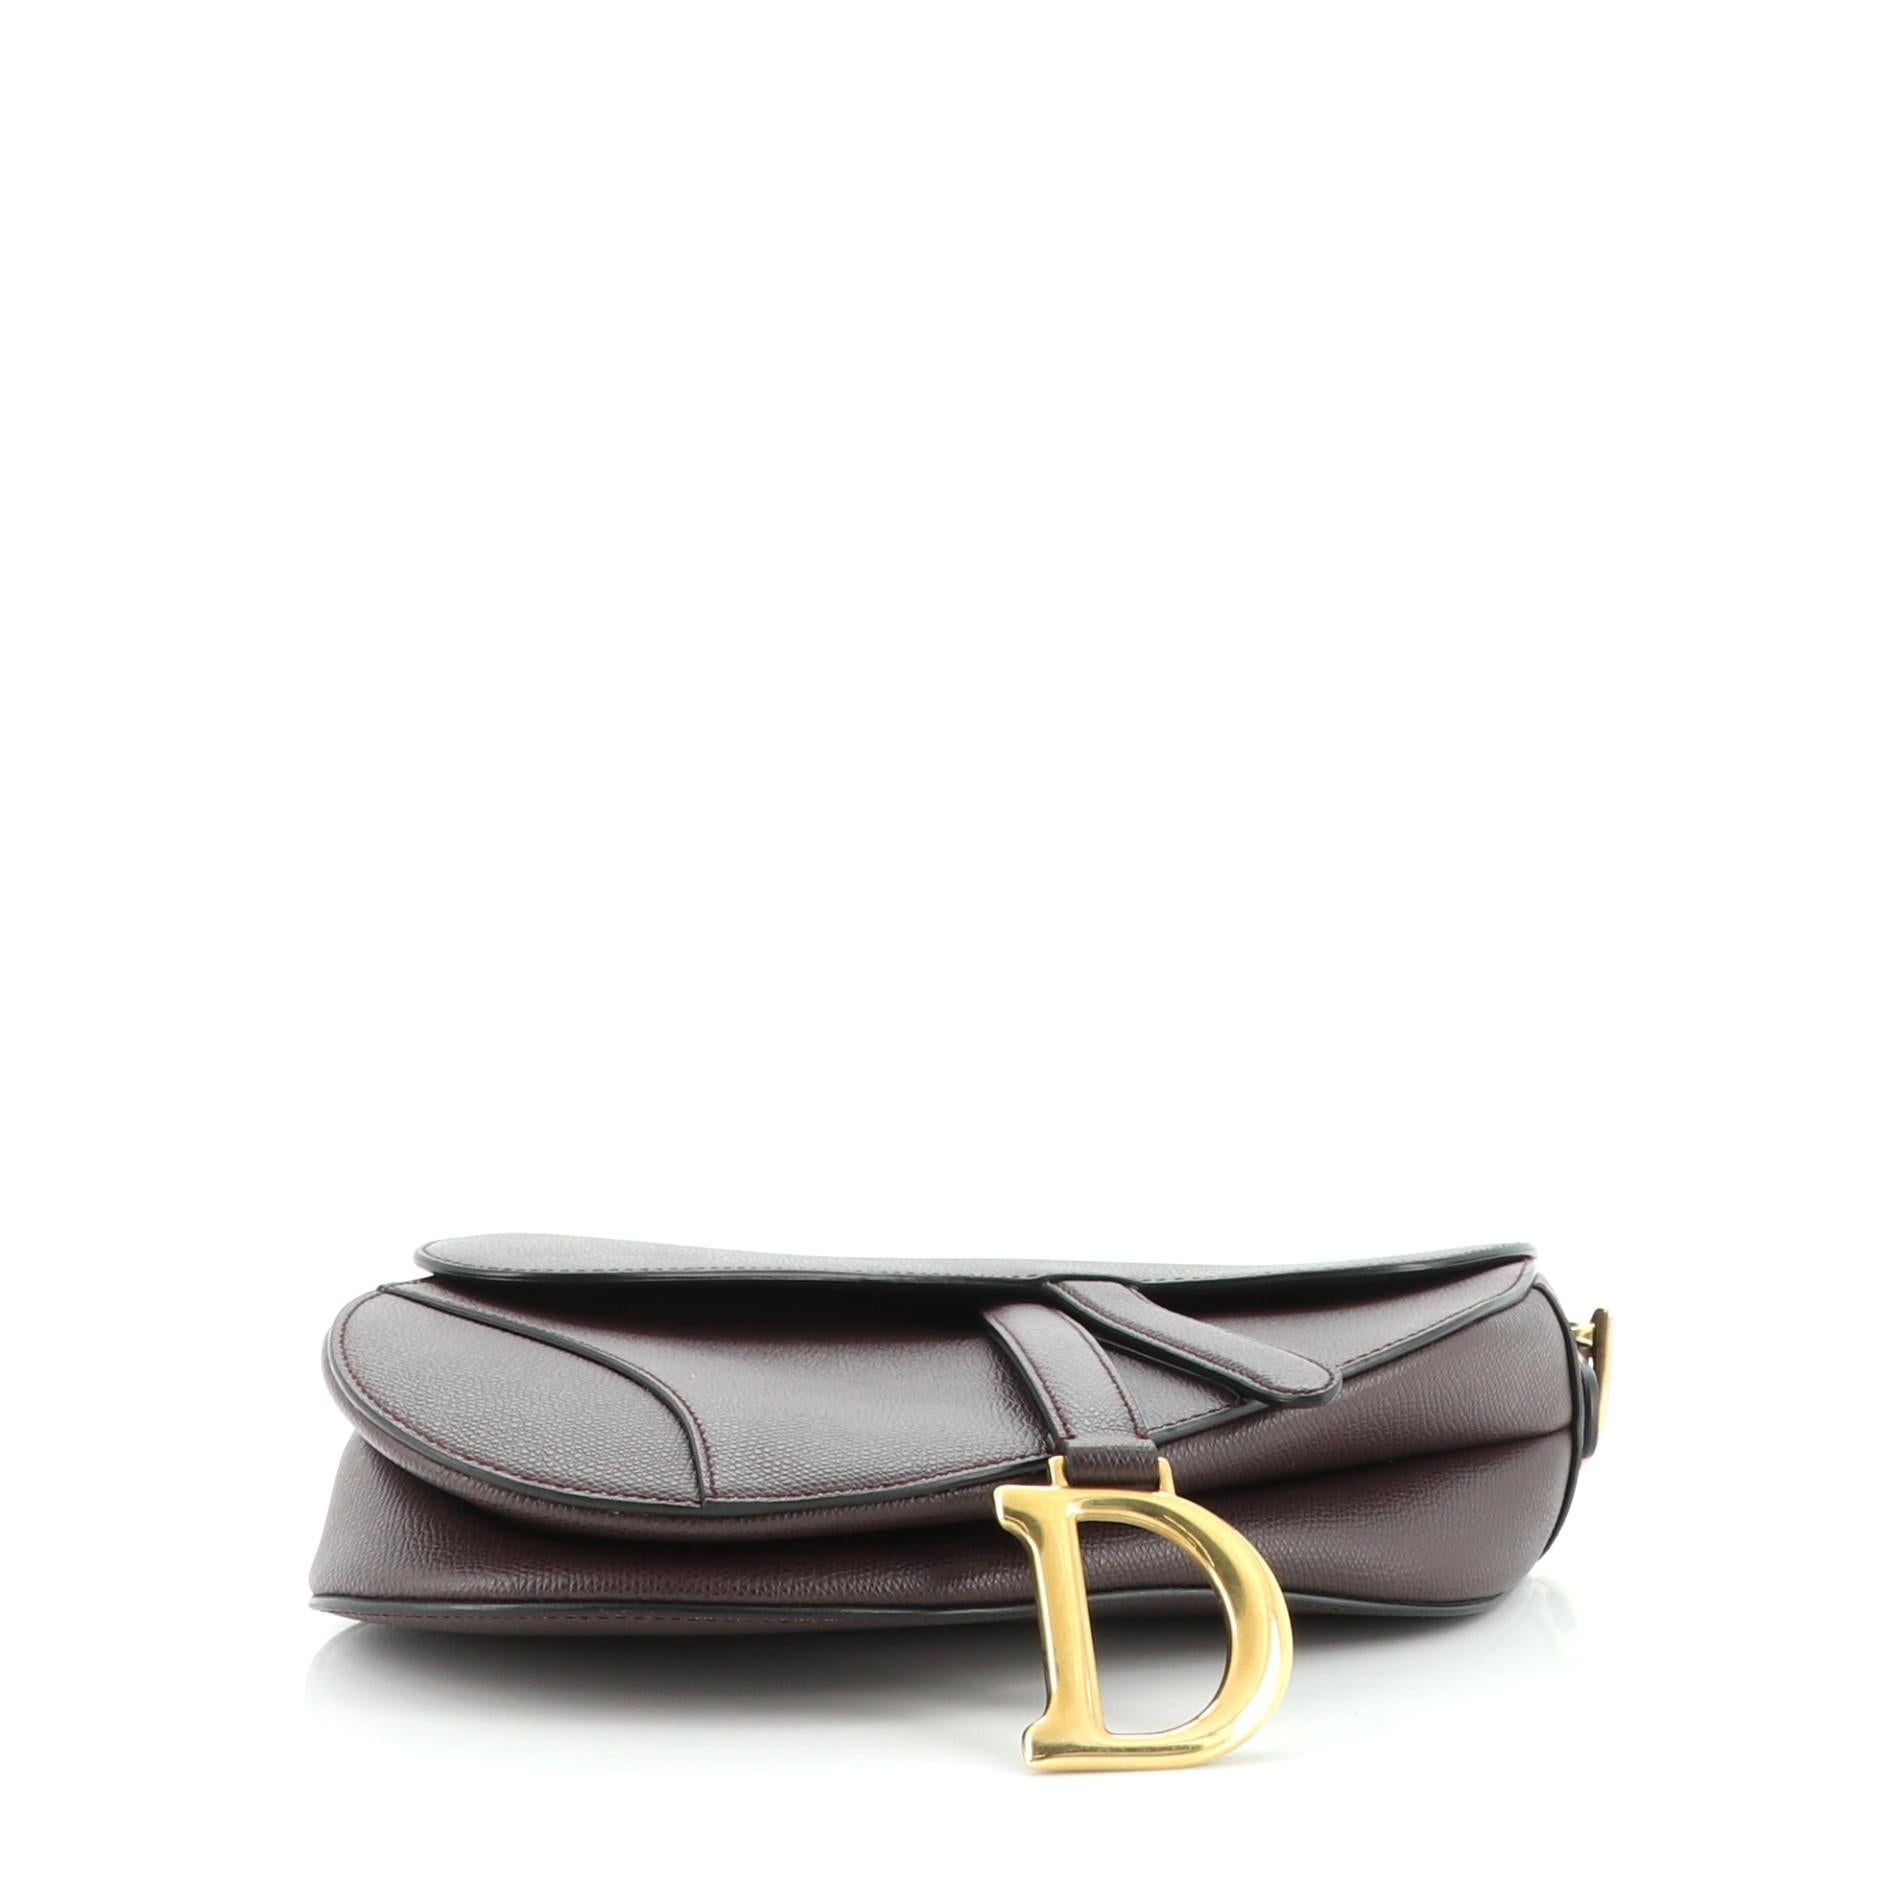 Black Christian Dior Saddle Handbag Leather Medium